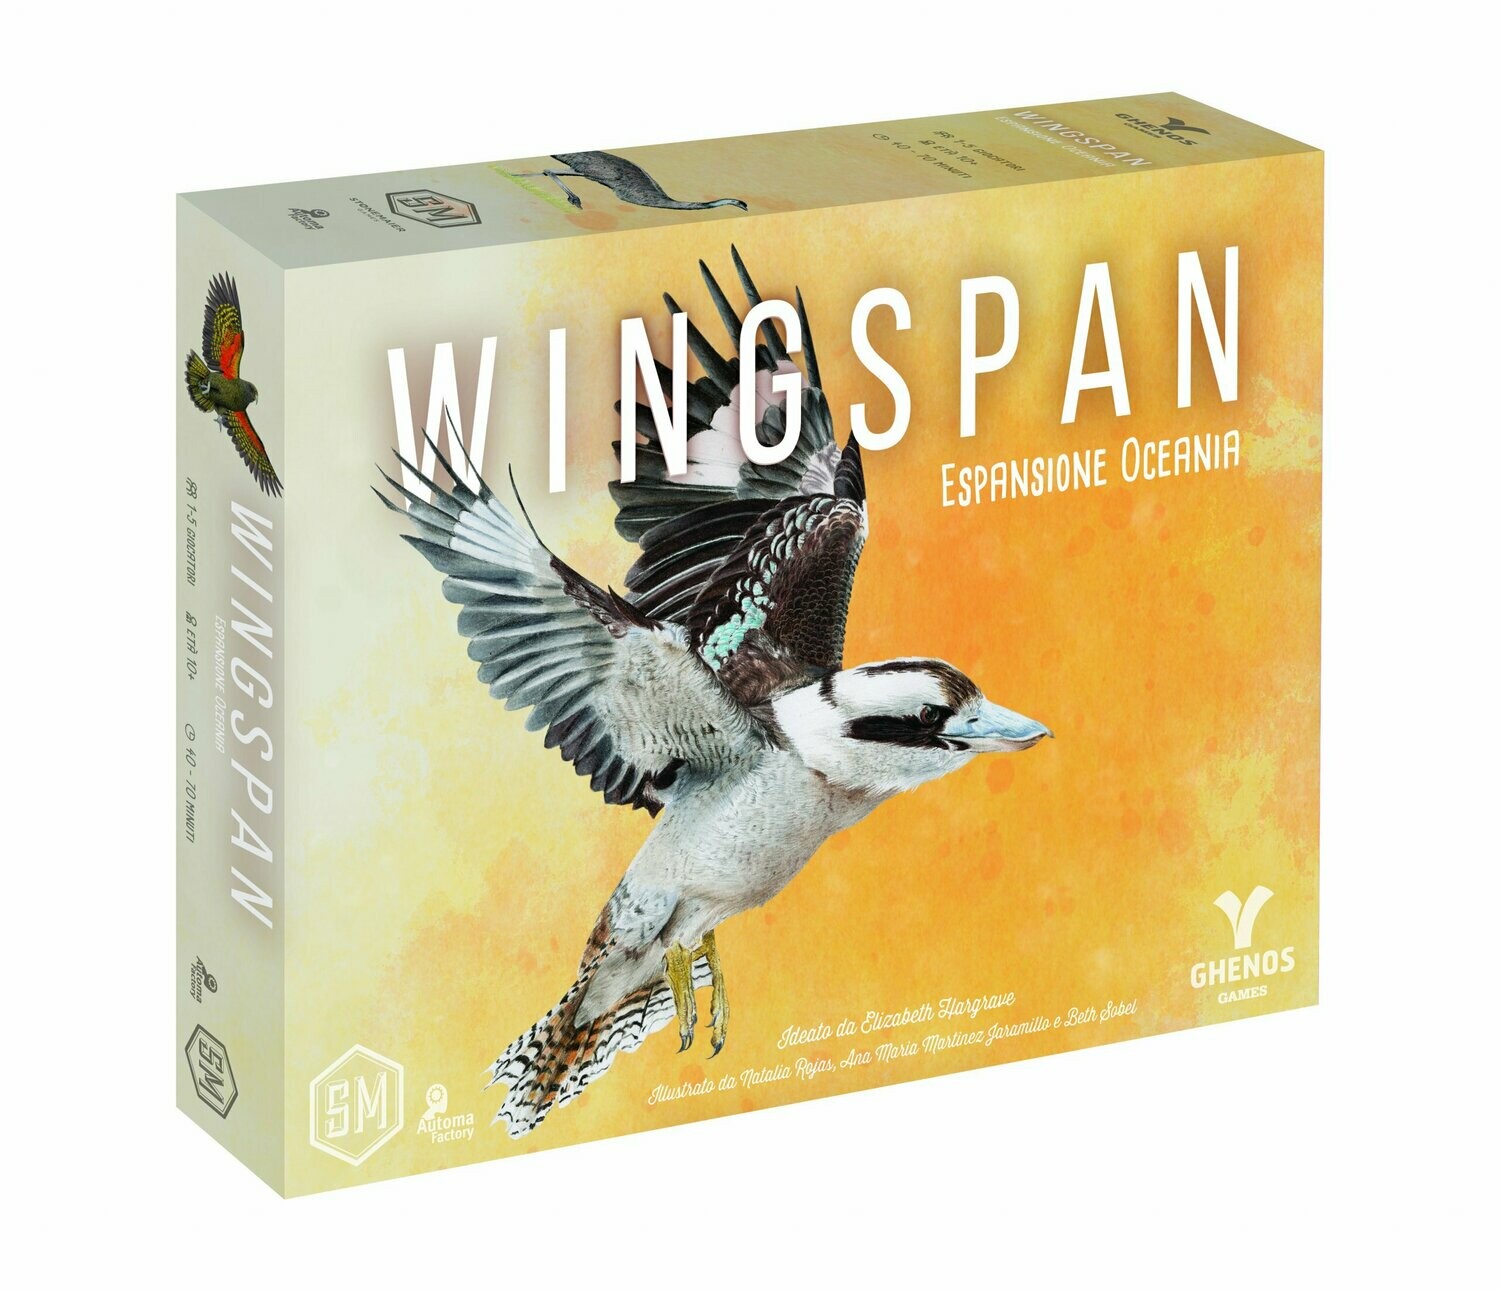 Wingspan - Espansione Oceania